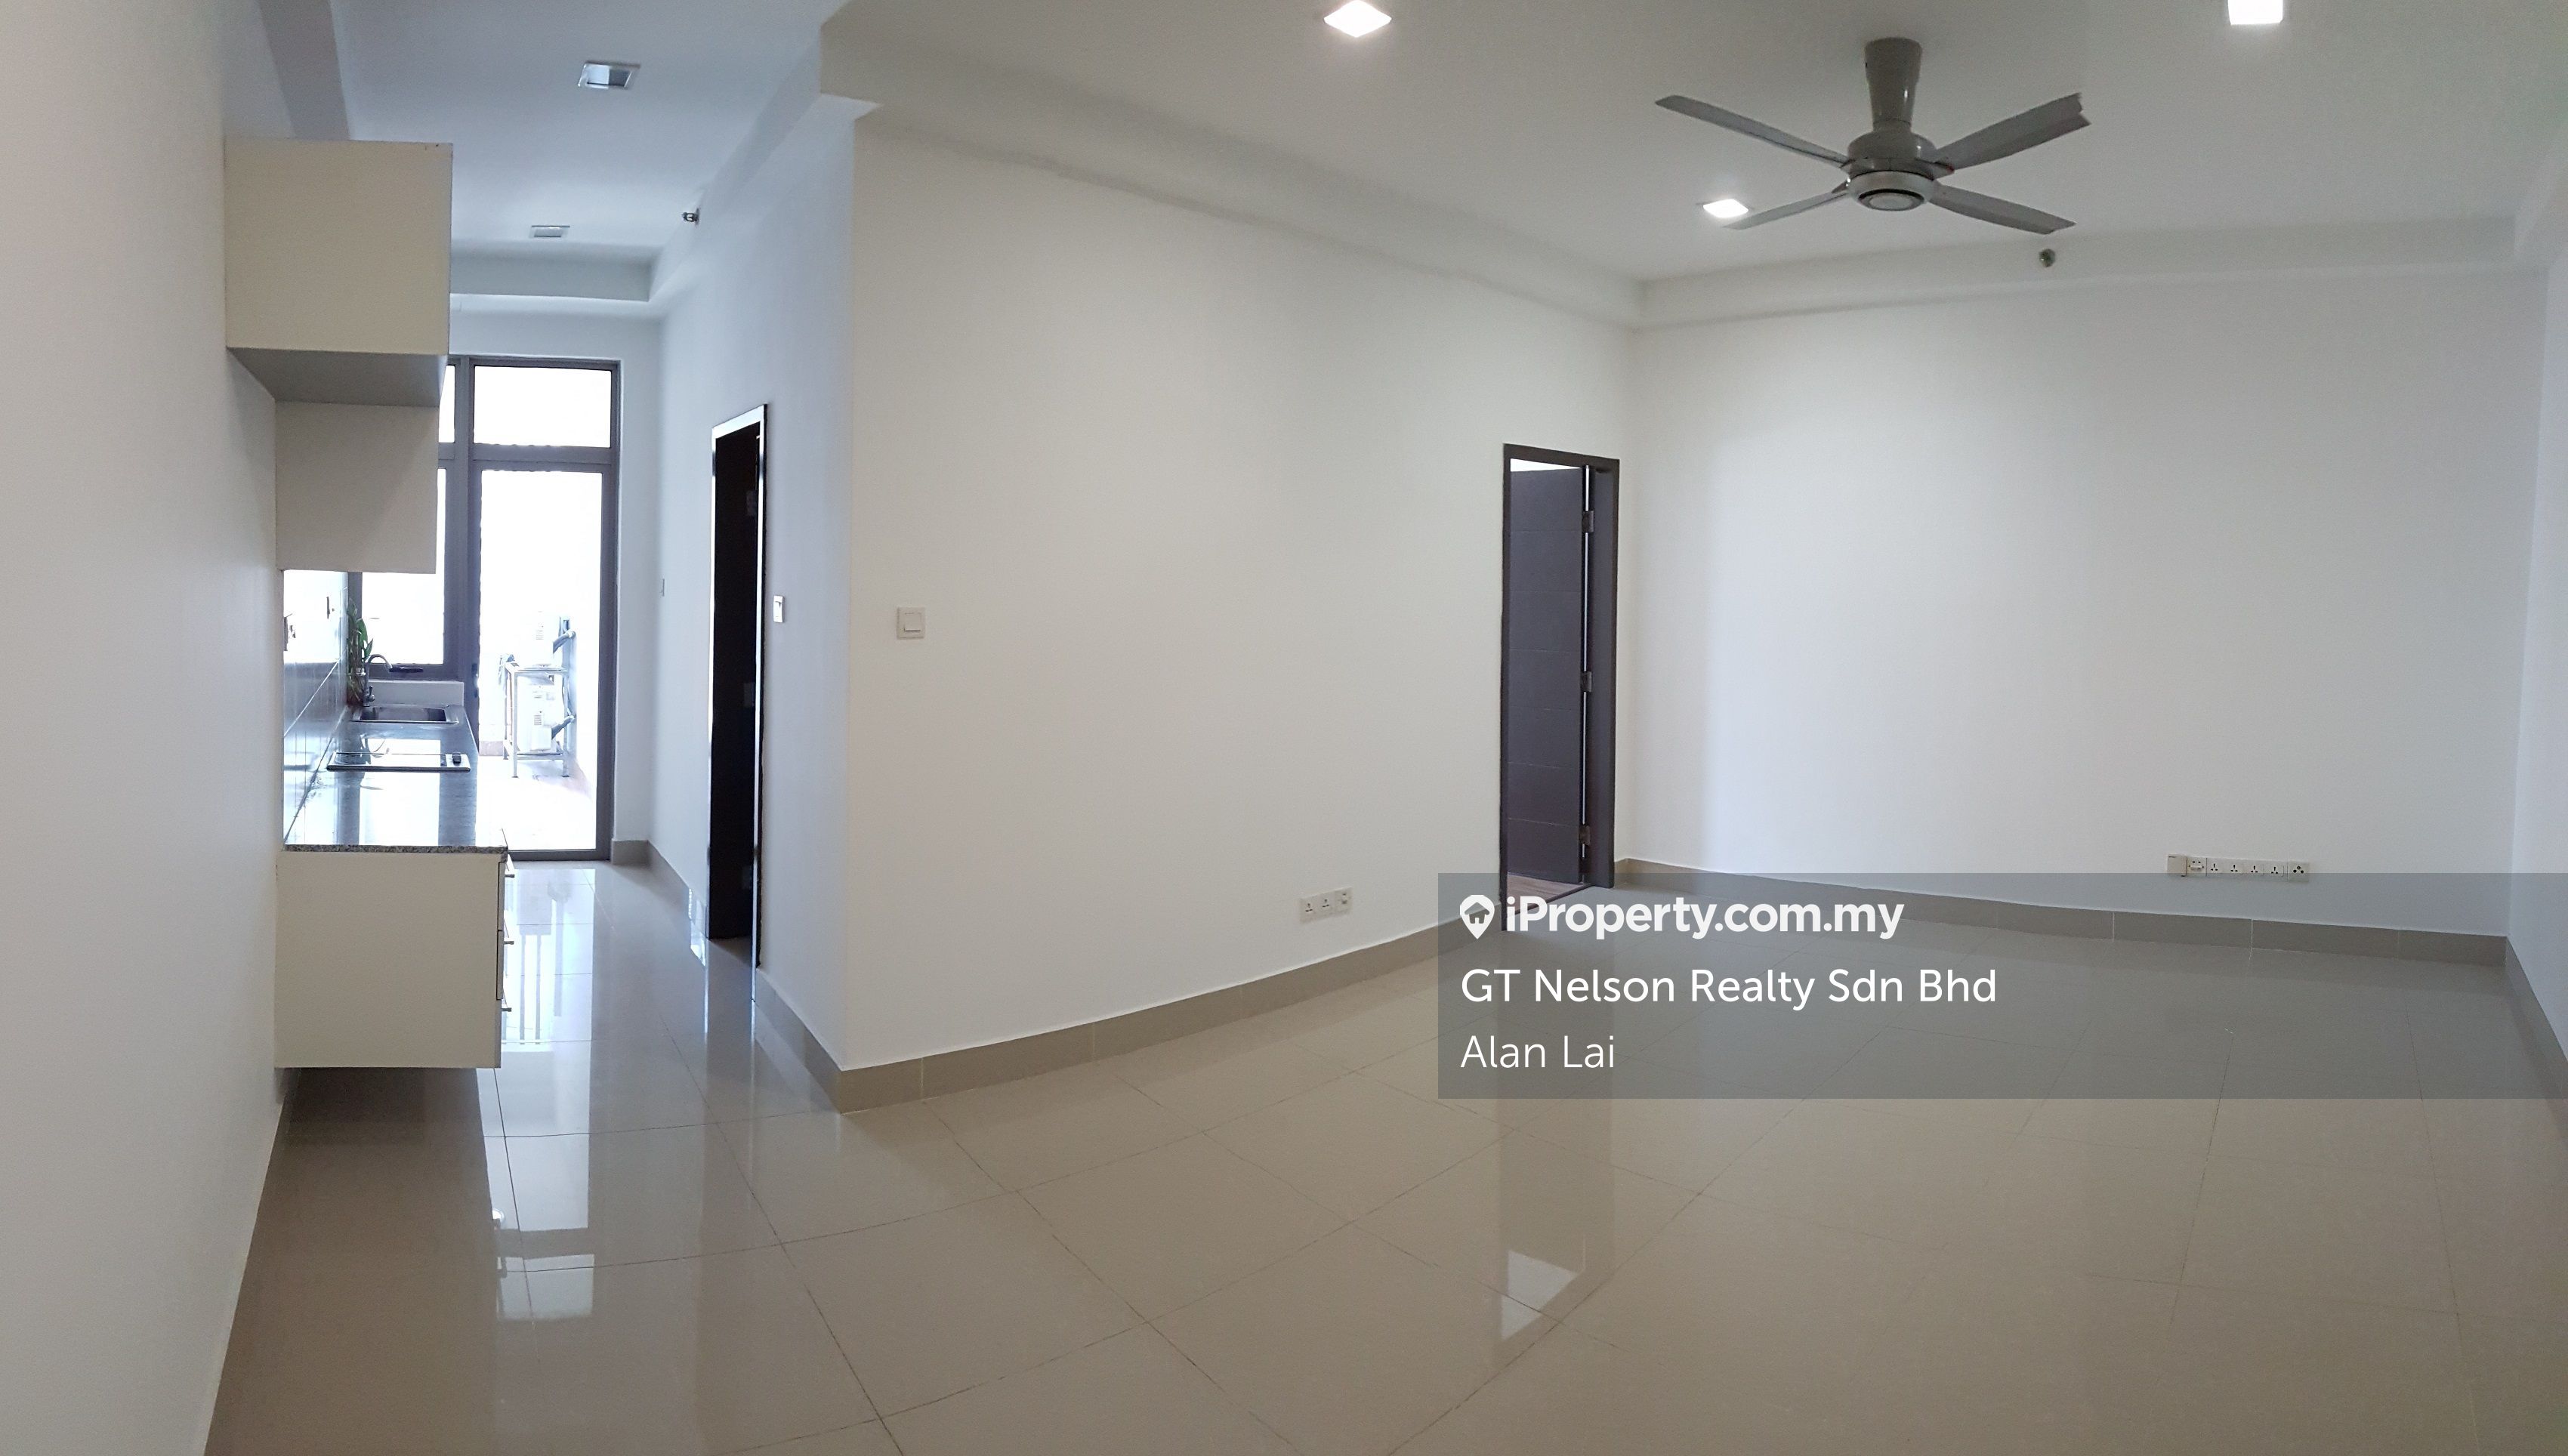 Shaftsbury Residence, Cyberjaya for sale - RM303000 | iProperty Malaysia